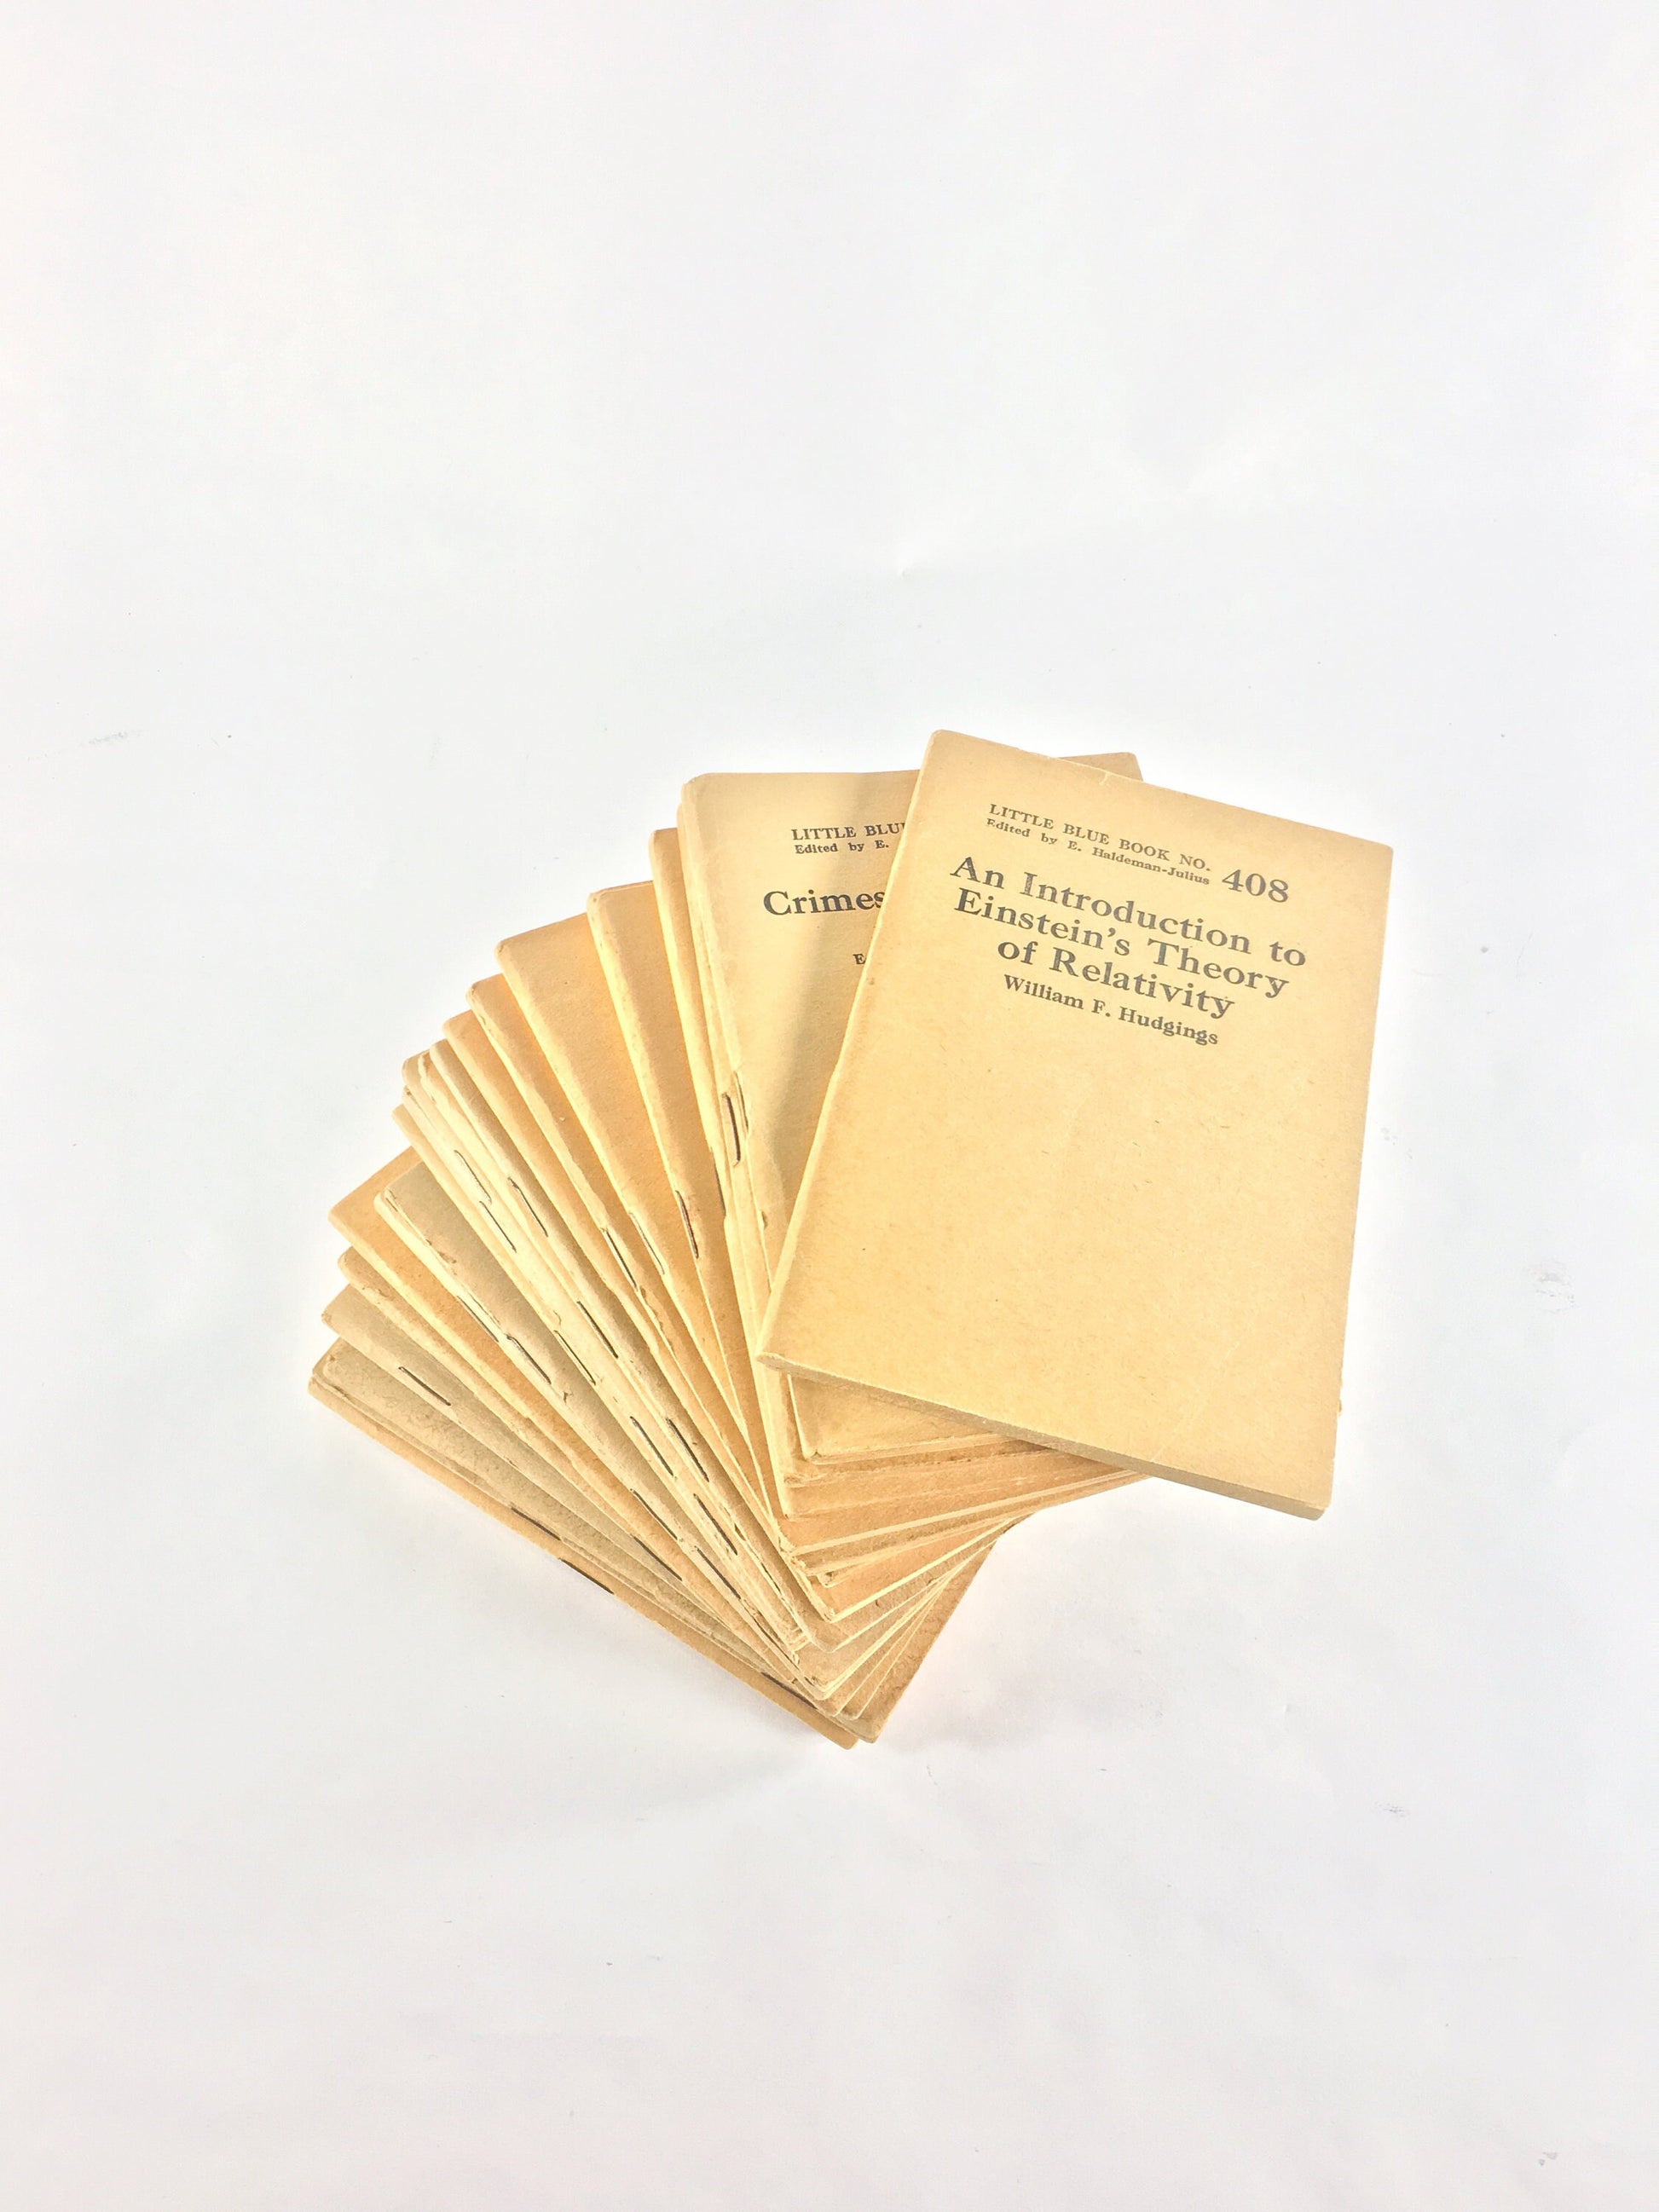 1923 Little Blue Books Select one of 26 booklets Haldeman-Julius Publishing Company. Collectible Nietzche Einstein Crime Pirates Church